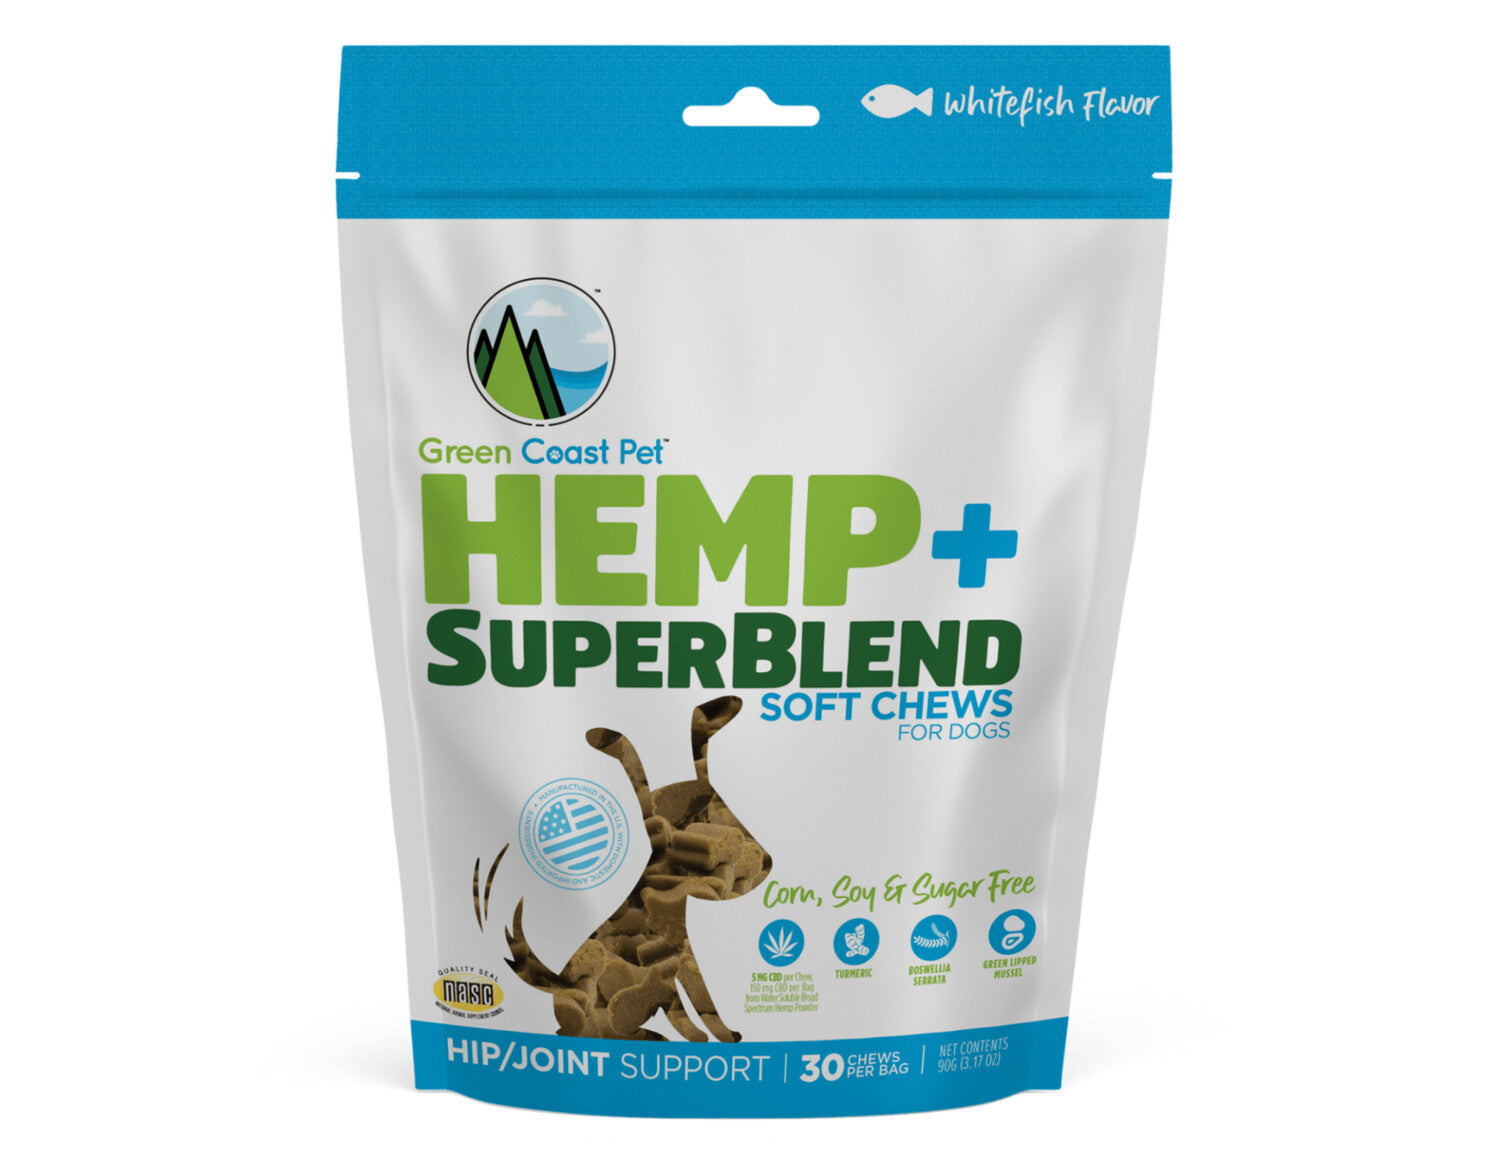 Green Coast Pet - Hemp + SuperBlend Soft Chews, Whitefish Flavor Dog Treat